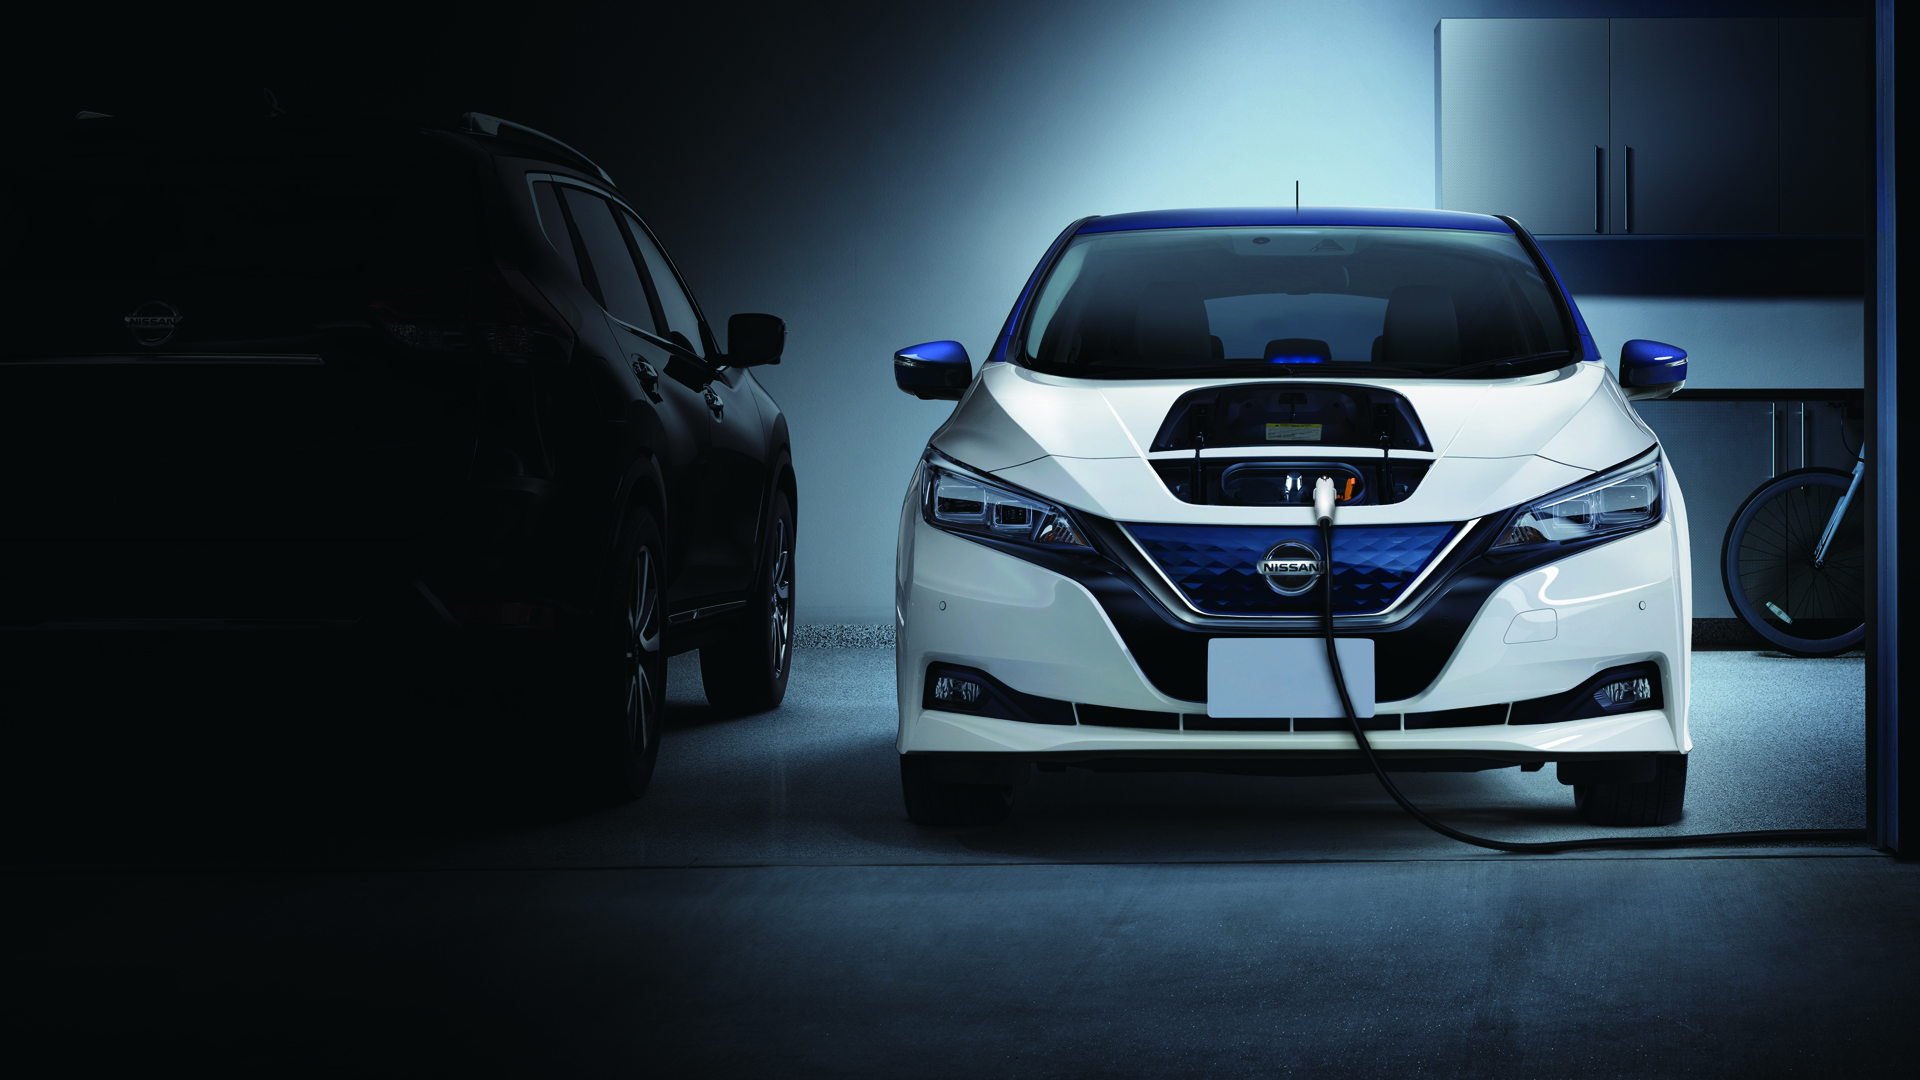 Nissan Leaf Mennyire Hasznalhato Egy Elektromos Auto A Gyakorlatban Nlc